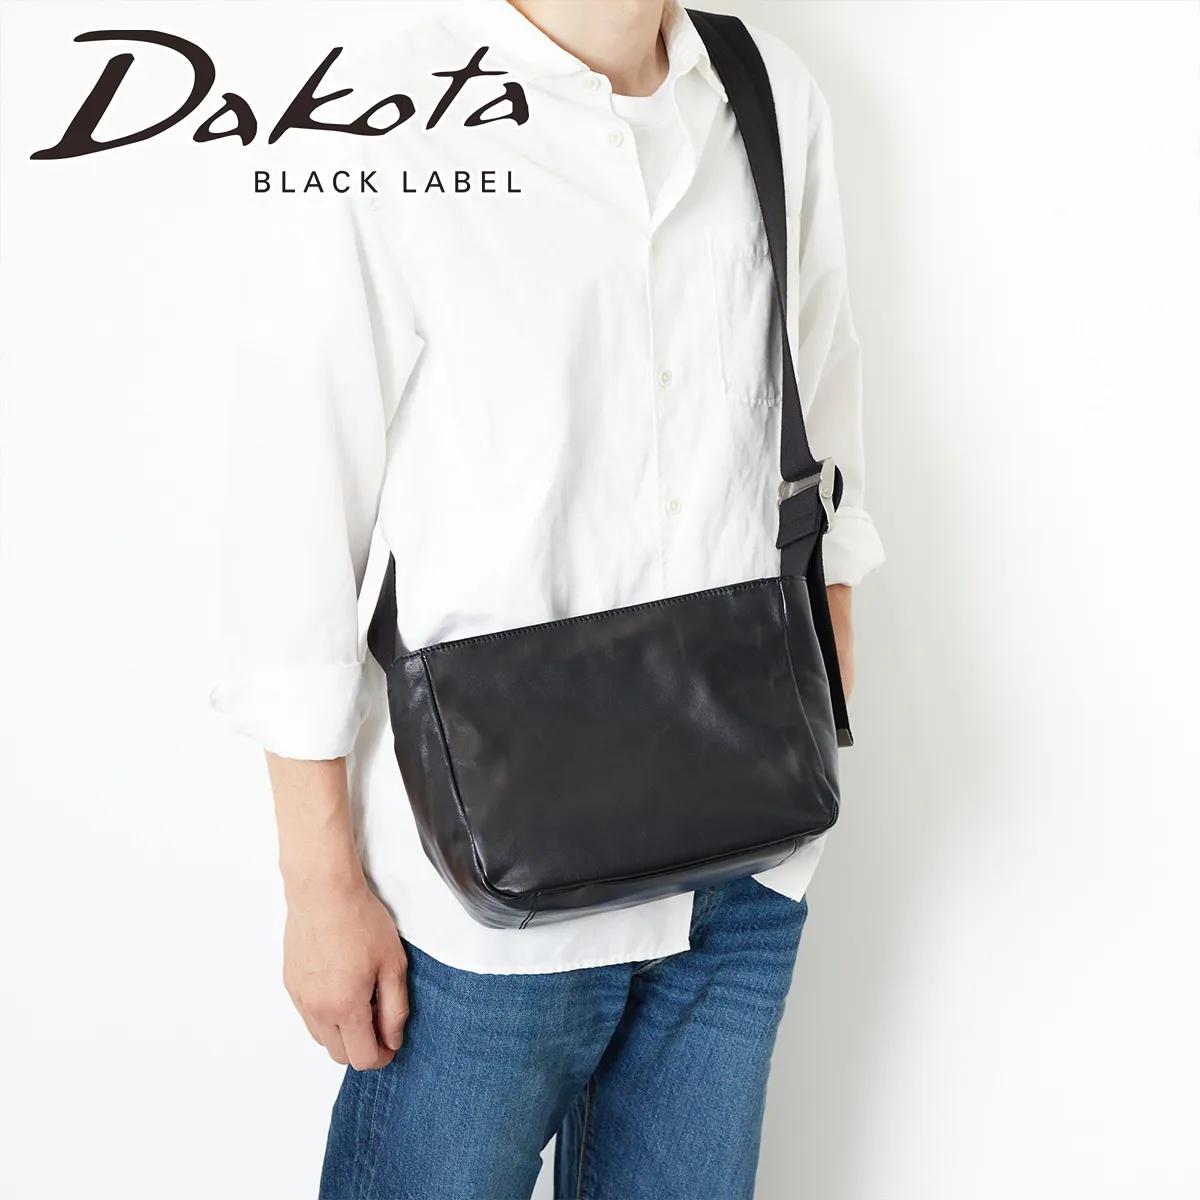 Dakota BLACK LABEL ダコタ ブラックレーベル シュリーマン ショルダーバッグ(M) 1623020